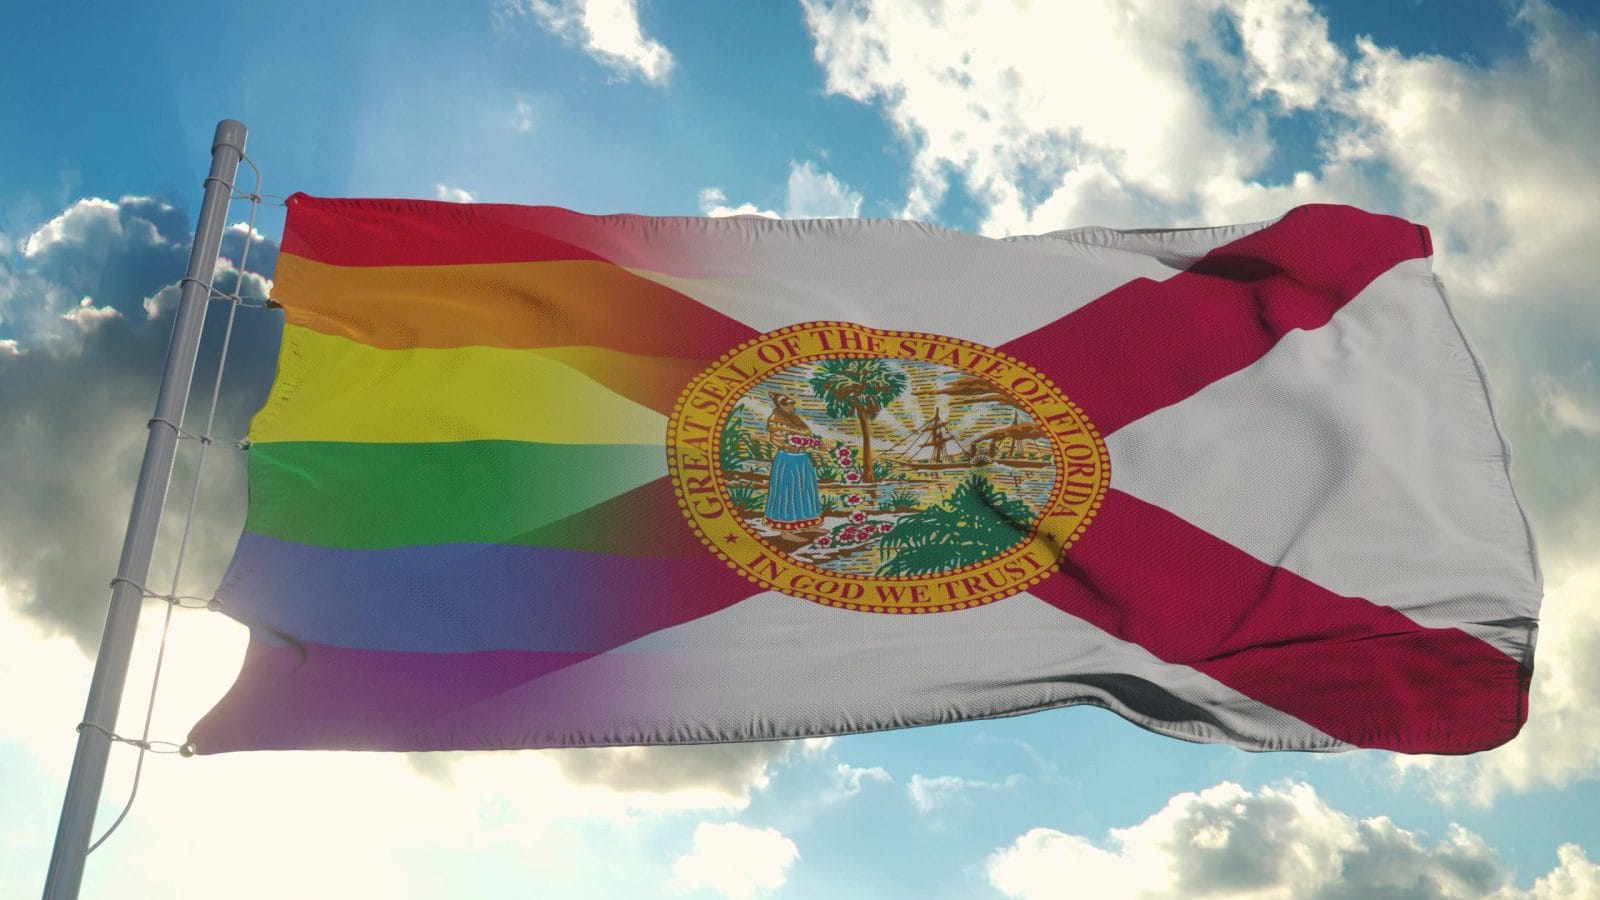 Flag of Florida and LGBT